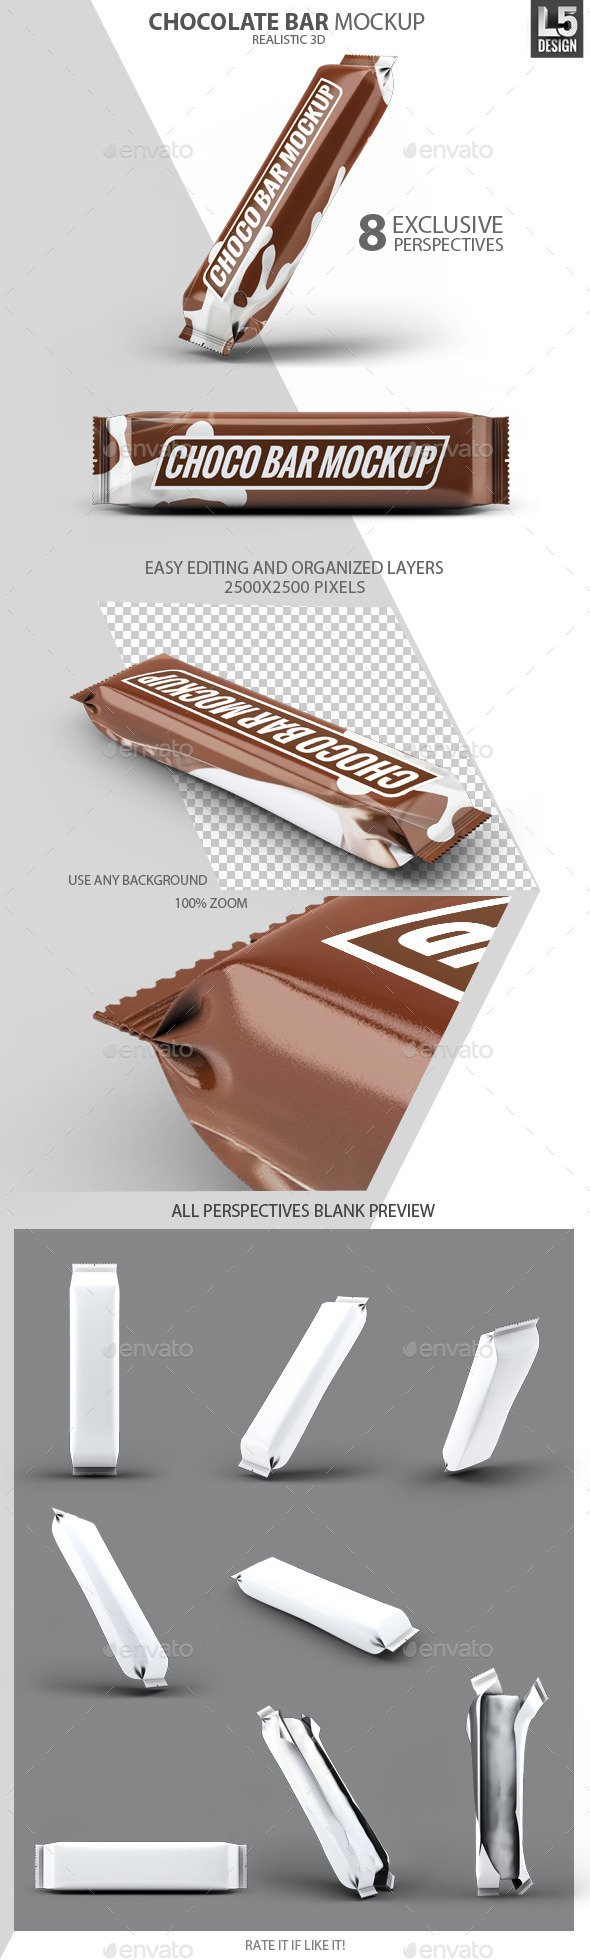 Download Chocolate Mockup Graphics Designs Templates From Graphicriver PSD Mockup Templates